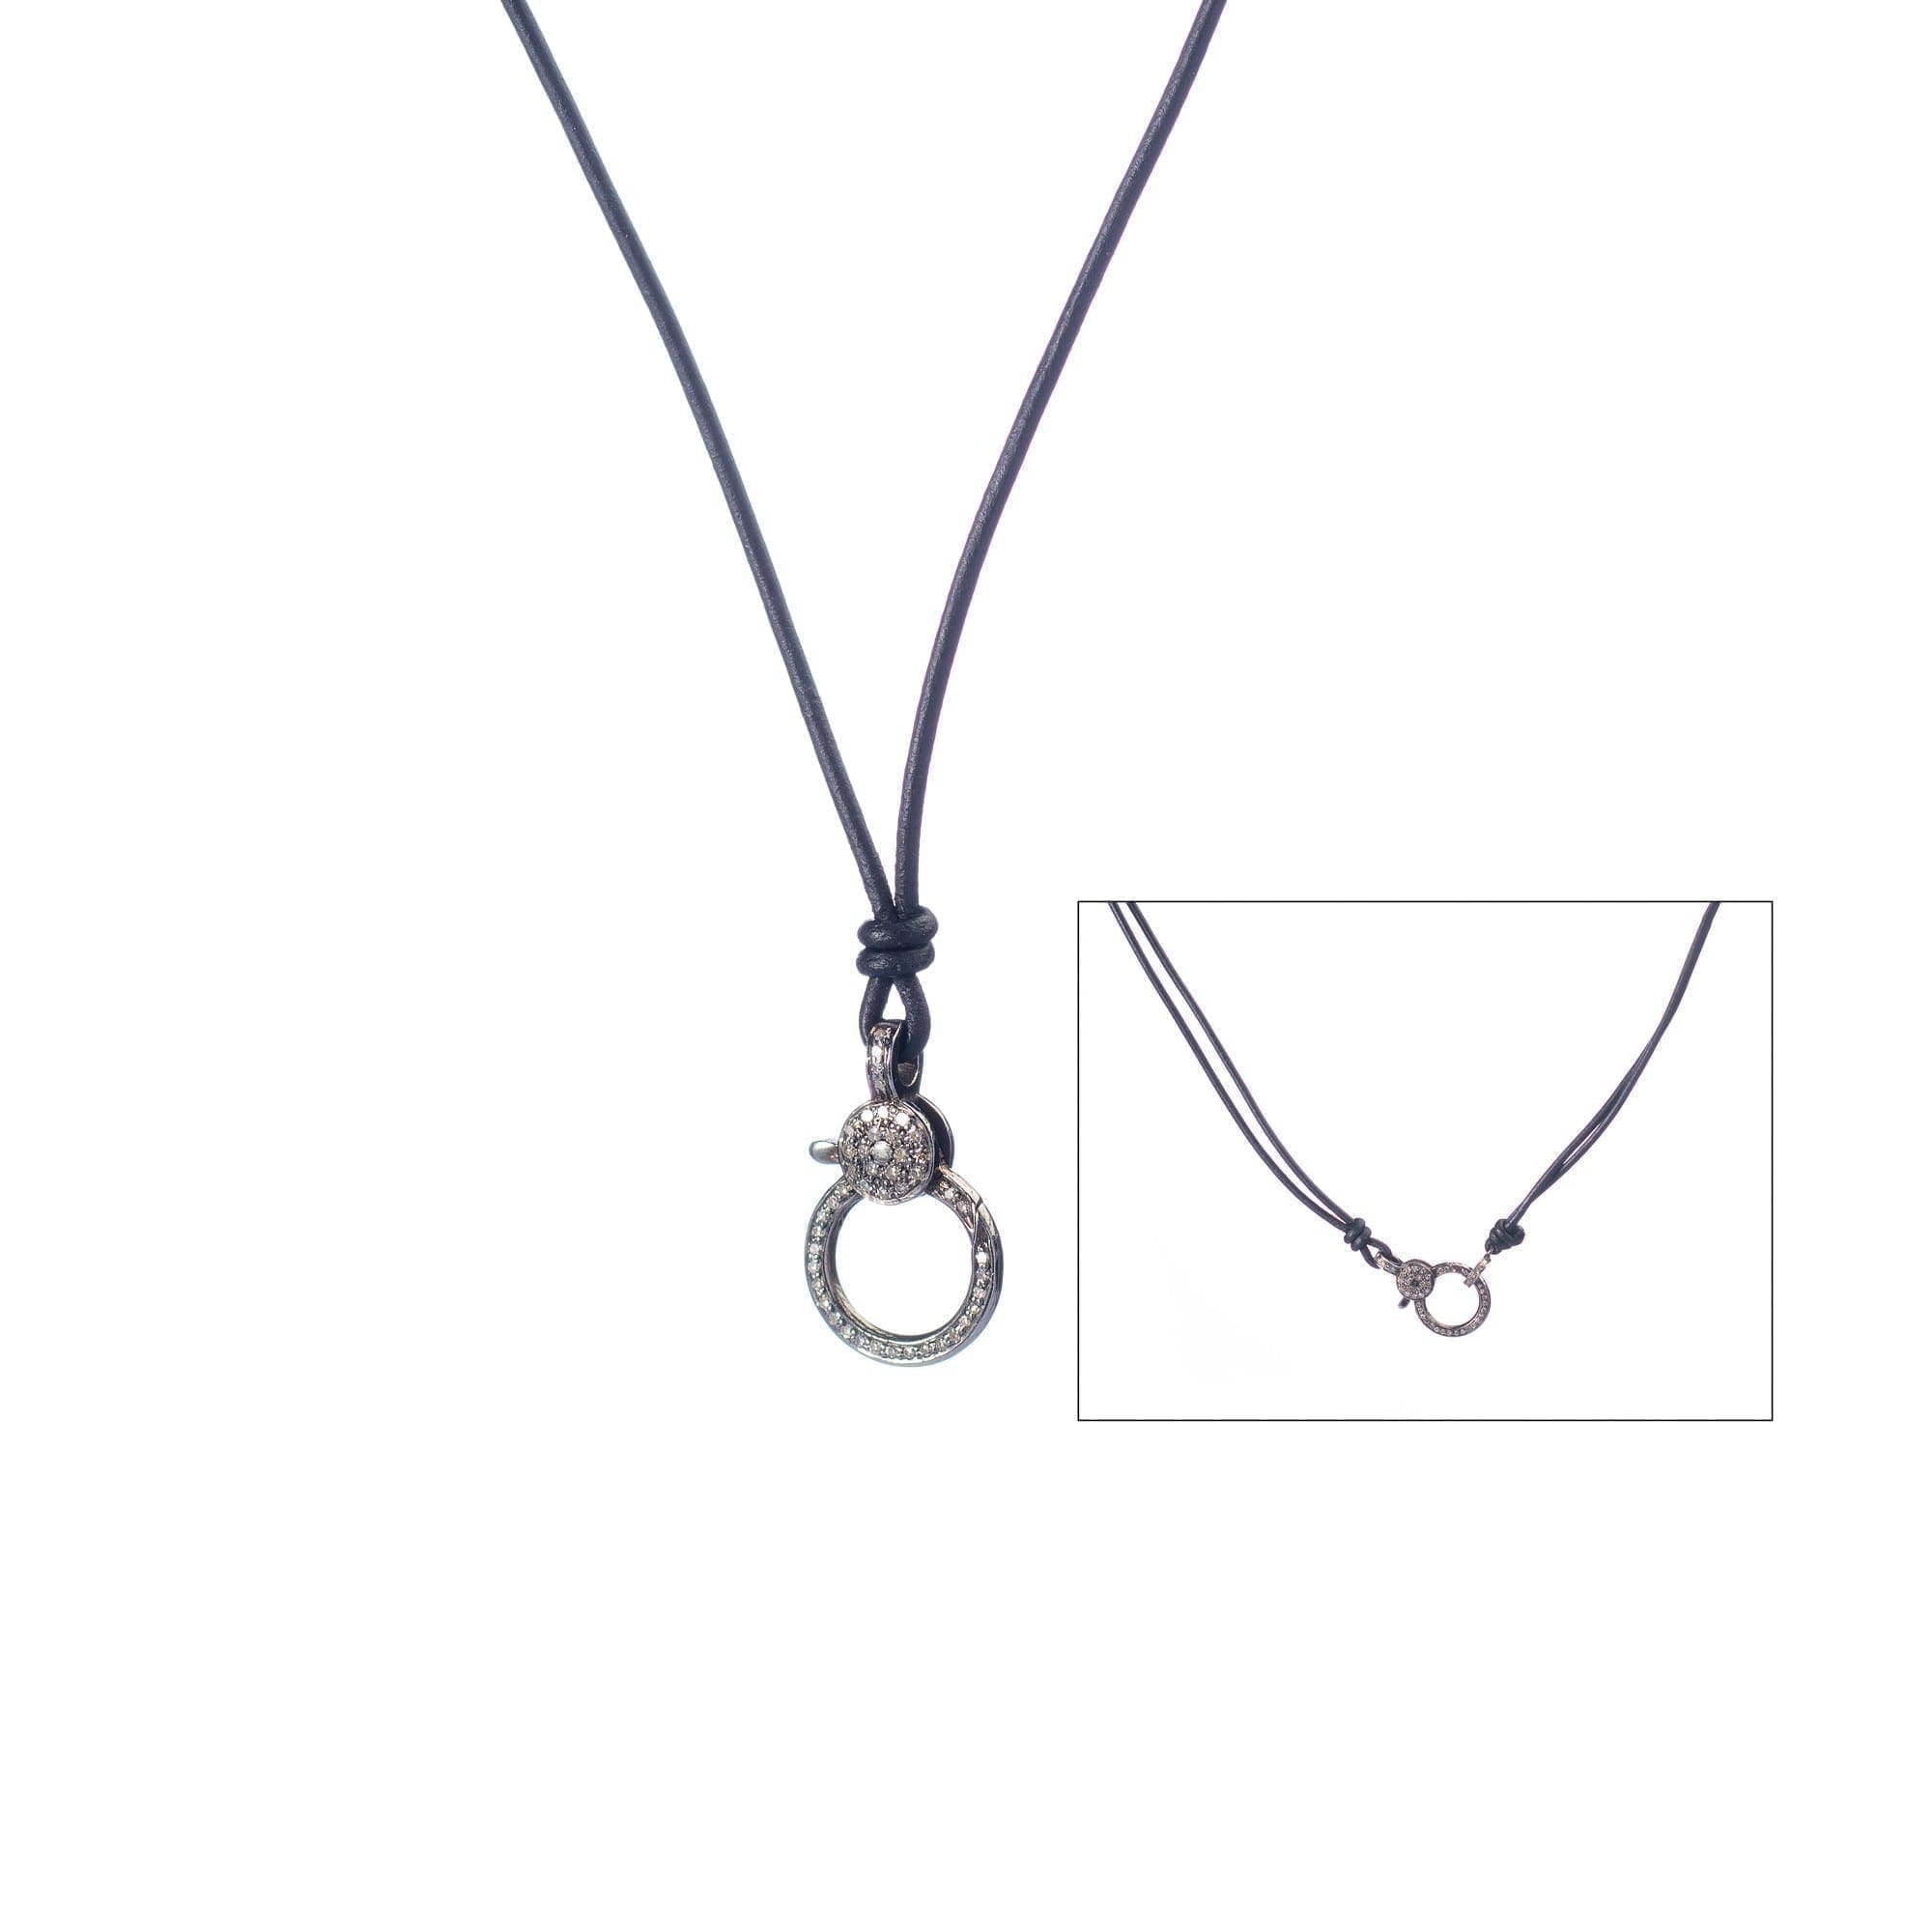 Buy Black Charm Ring Men Necklace @ Best Price 1497